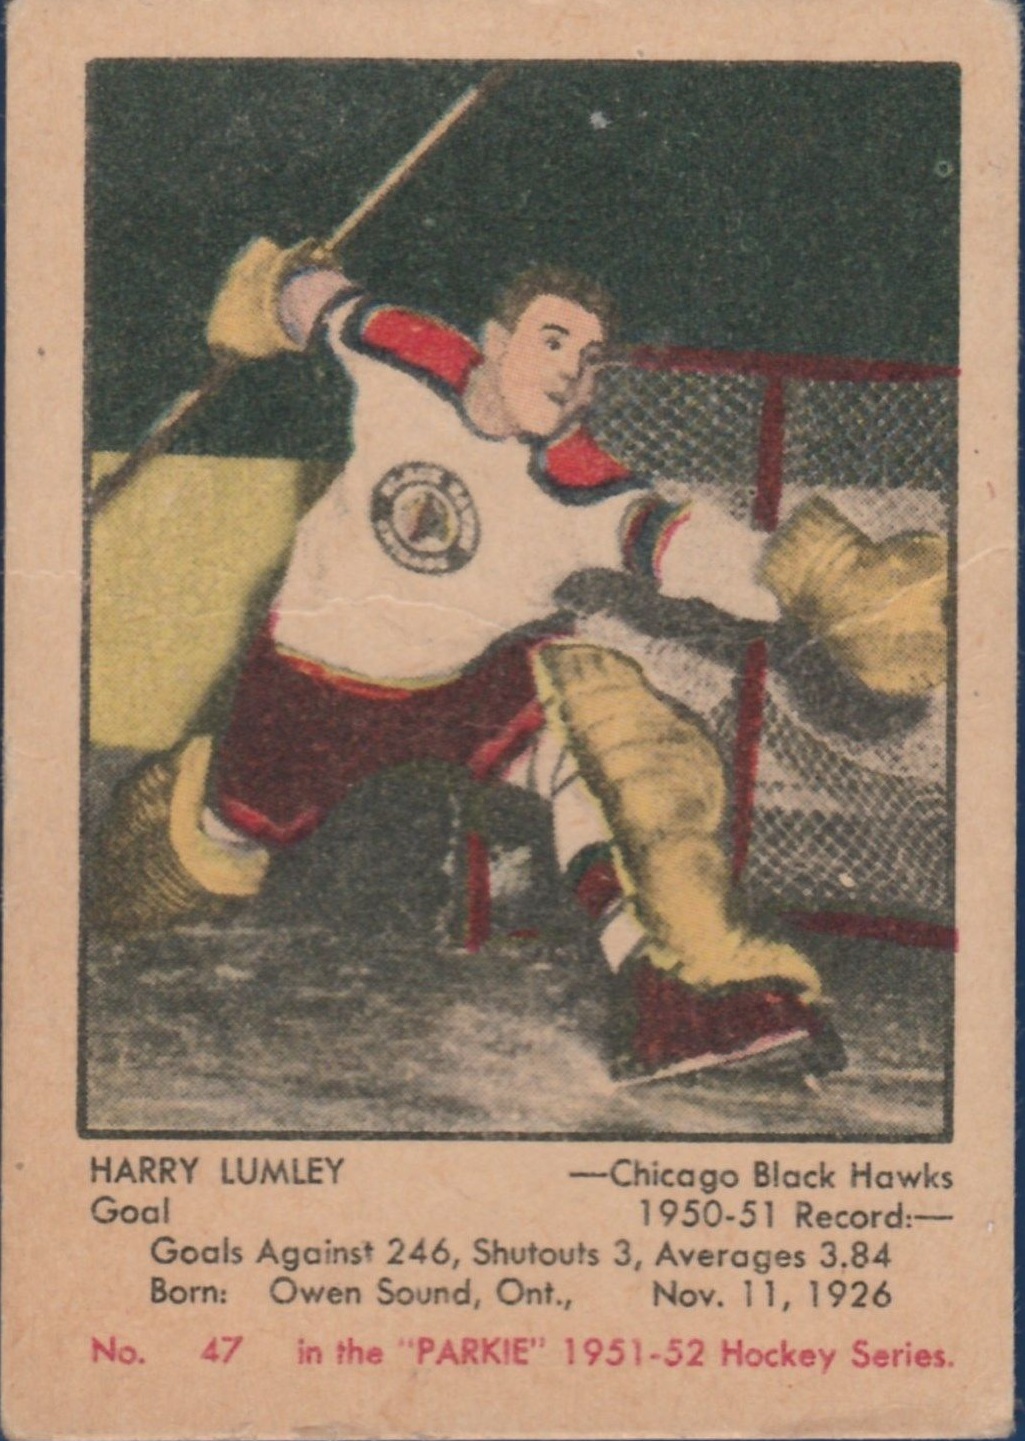  Harry Lumley player image